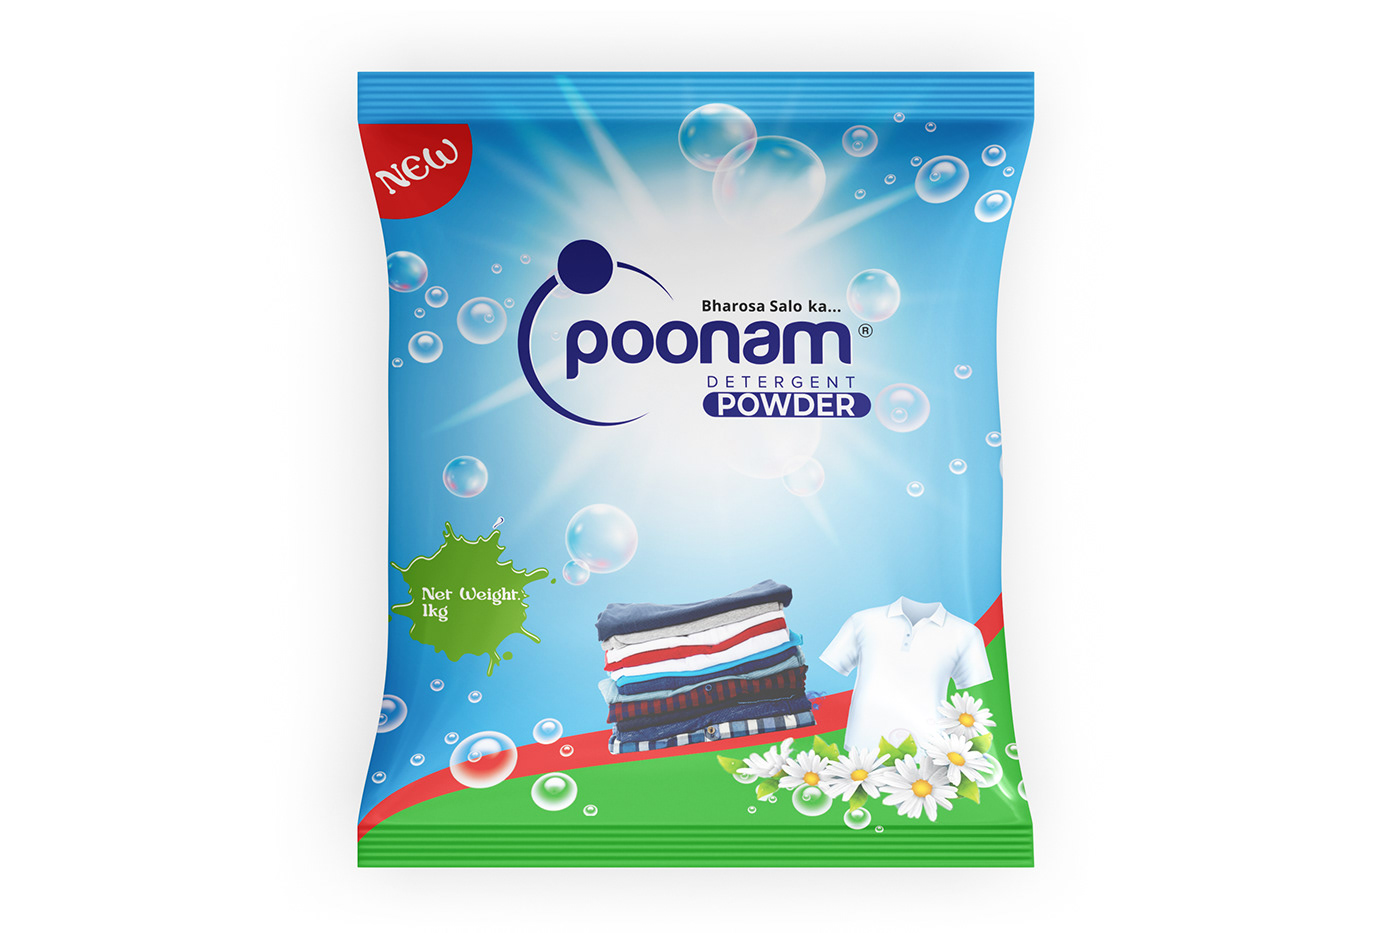 detergent powder Washing washing powder Pouch Packaging pouch Mockup brand identity Clots